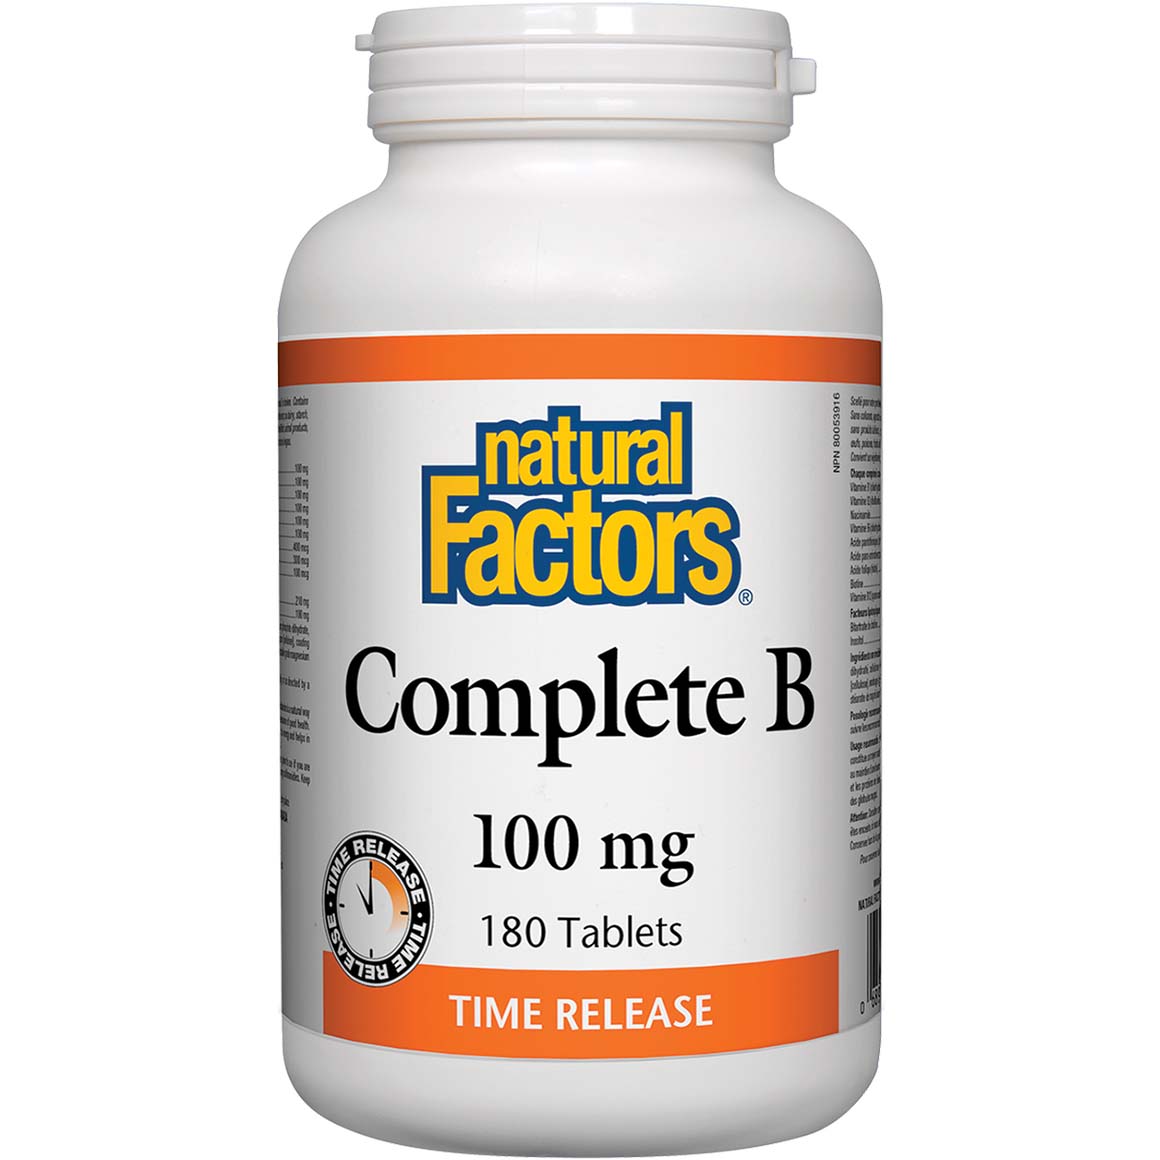 Natural Factors Complete B, 100 mg, 180 Tablets